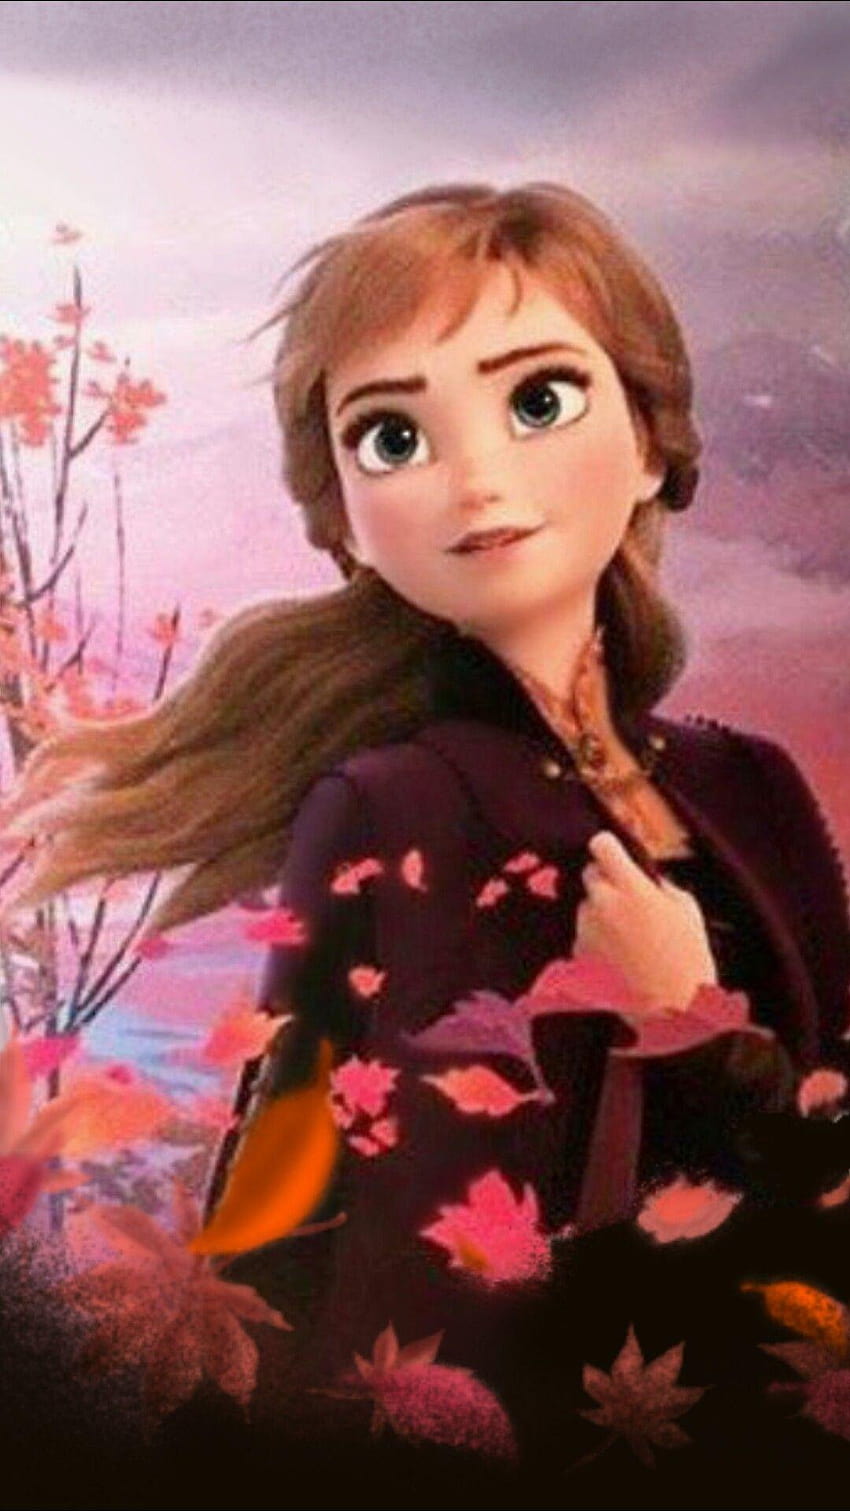 Frozen 2 Anna's Double Braid-Back - Cute Girls Hairstyles